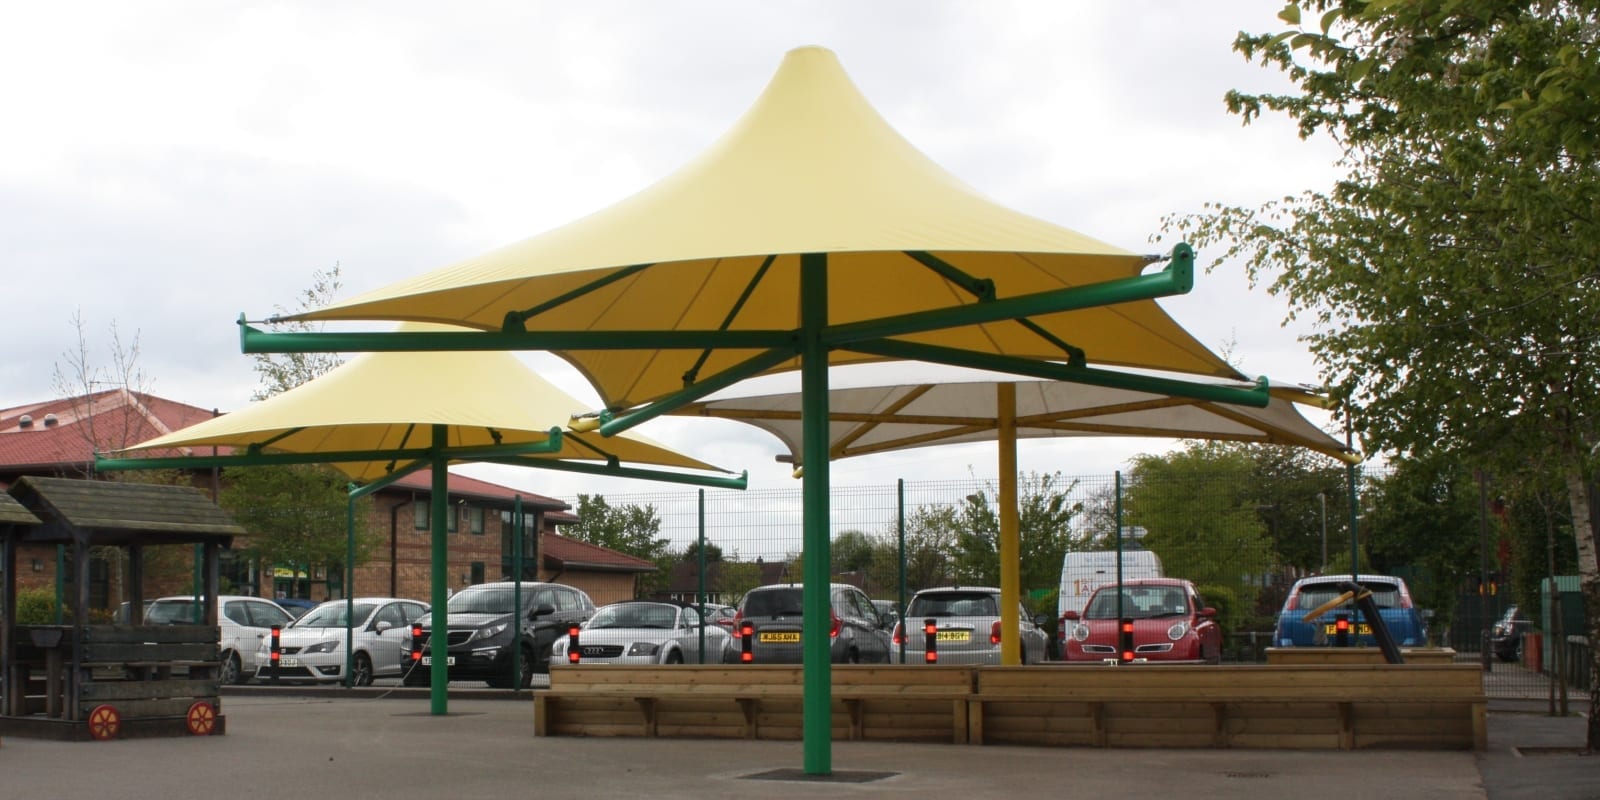 Umbrella canopies we designed for Westmorland School